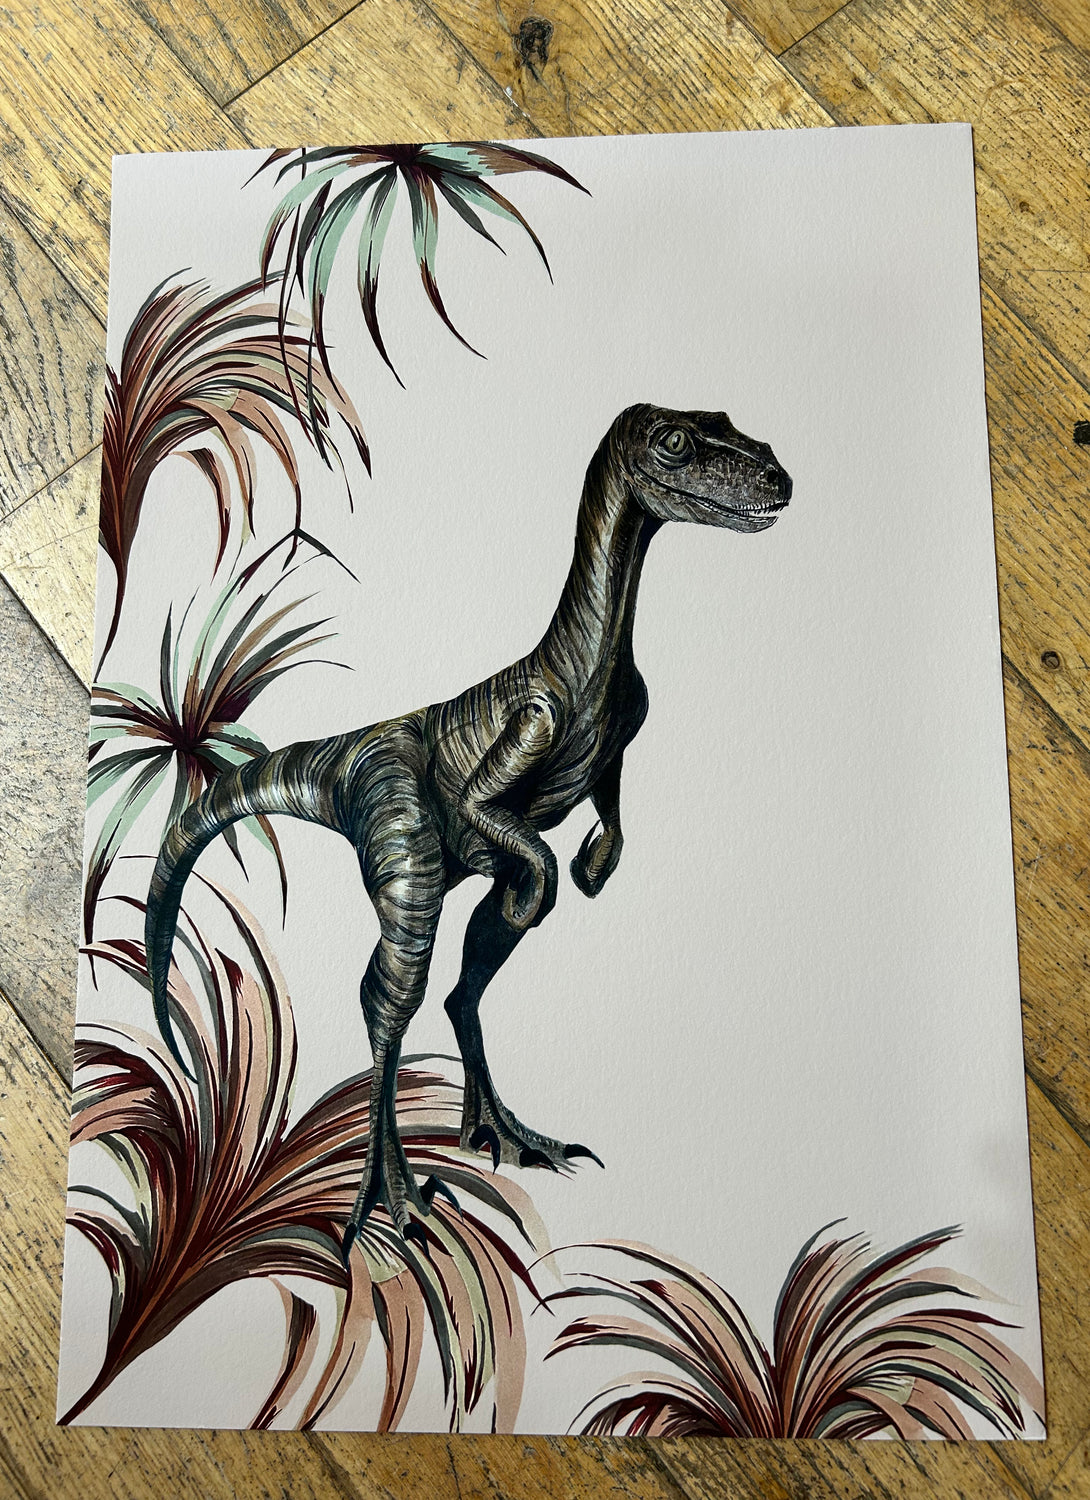 A3 Velociraptor Dinosaur Print on Pale Dusty Pink